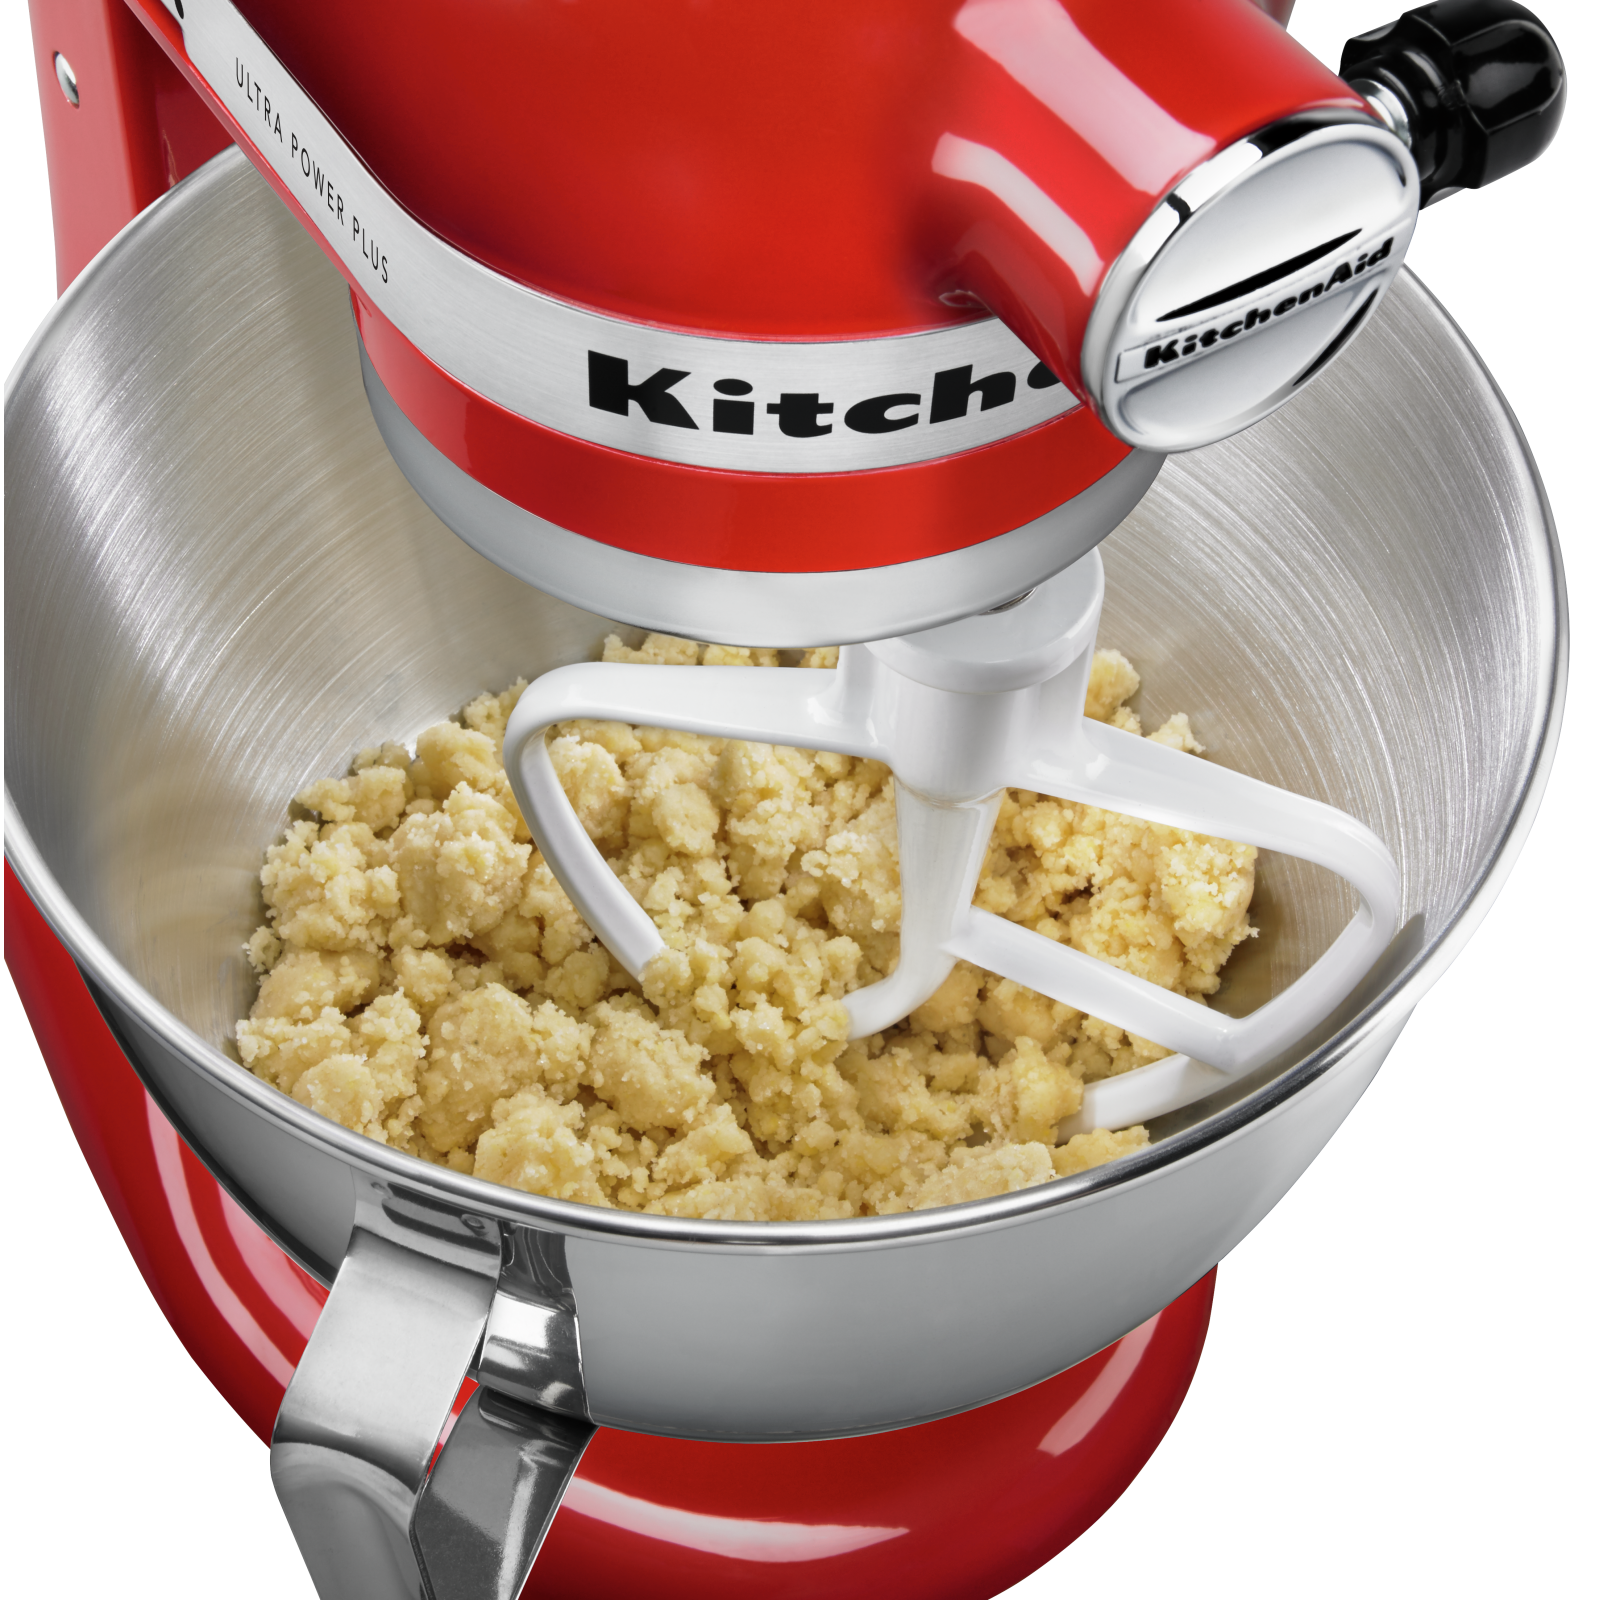 KitchenAid -   Ultra Power Plus Series 4.5 Quart Tilt-Head Mixer In Red - KSM96ER